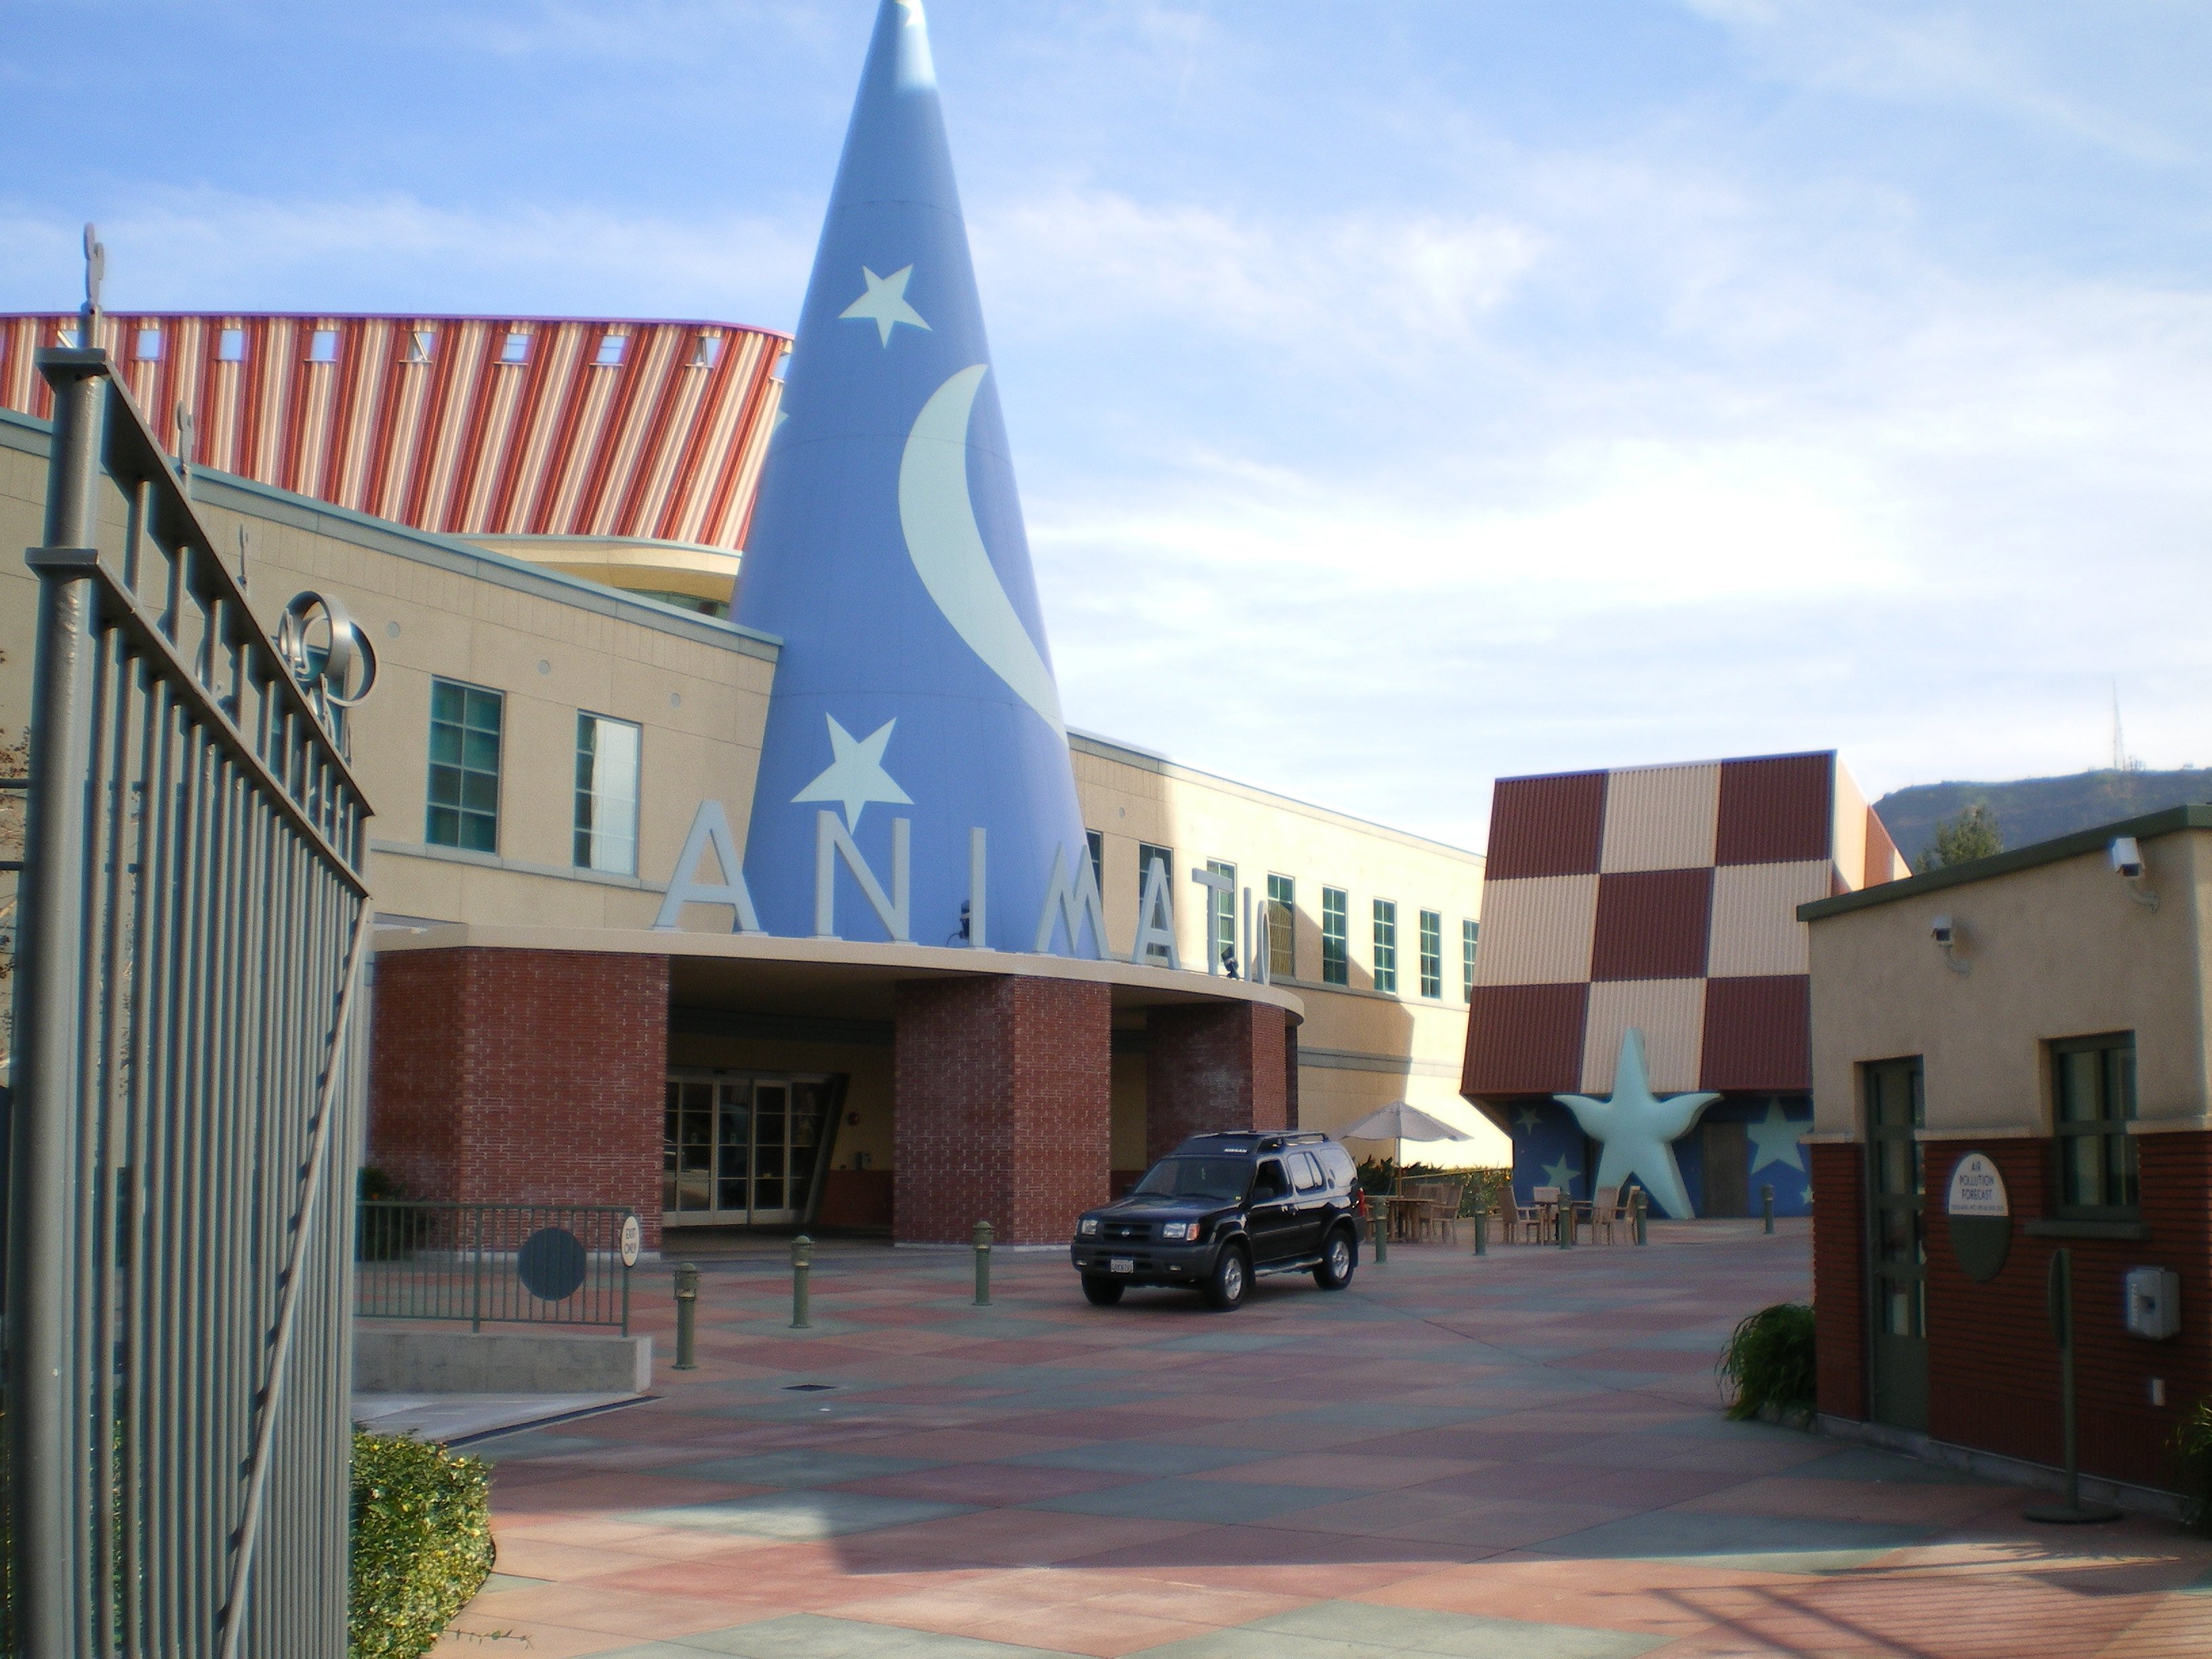 Disney Animation Building